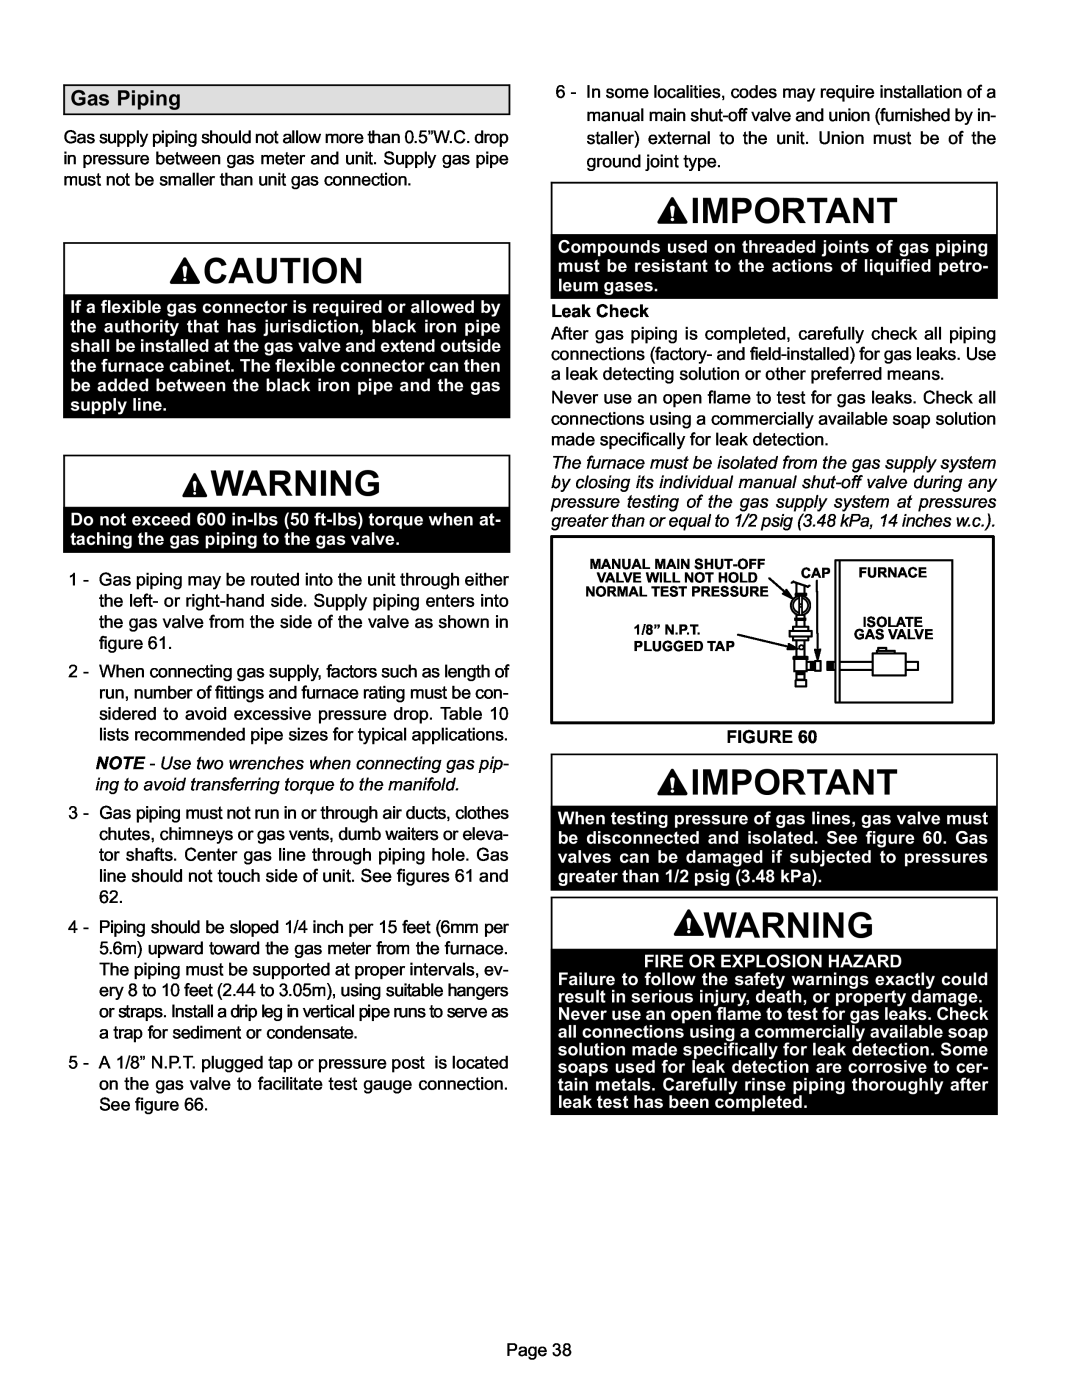 Lennox International Inc EL296UHE, Elite Series Gas Furnace installation instructions Gas Piping, Leak Check 